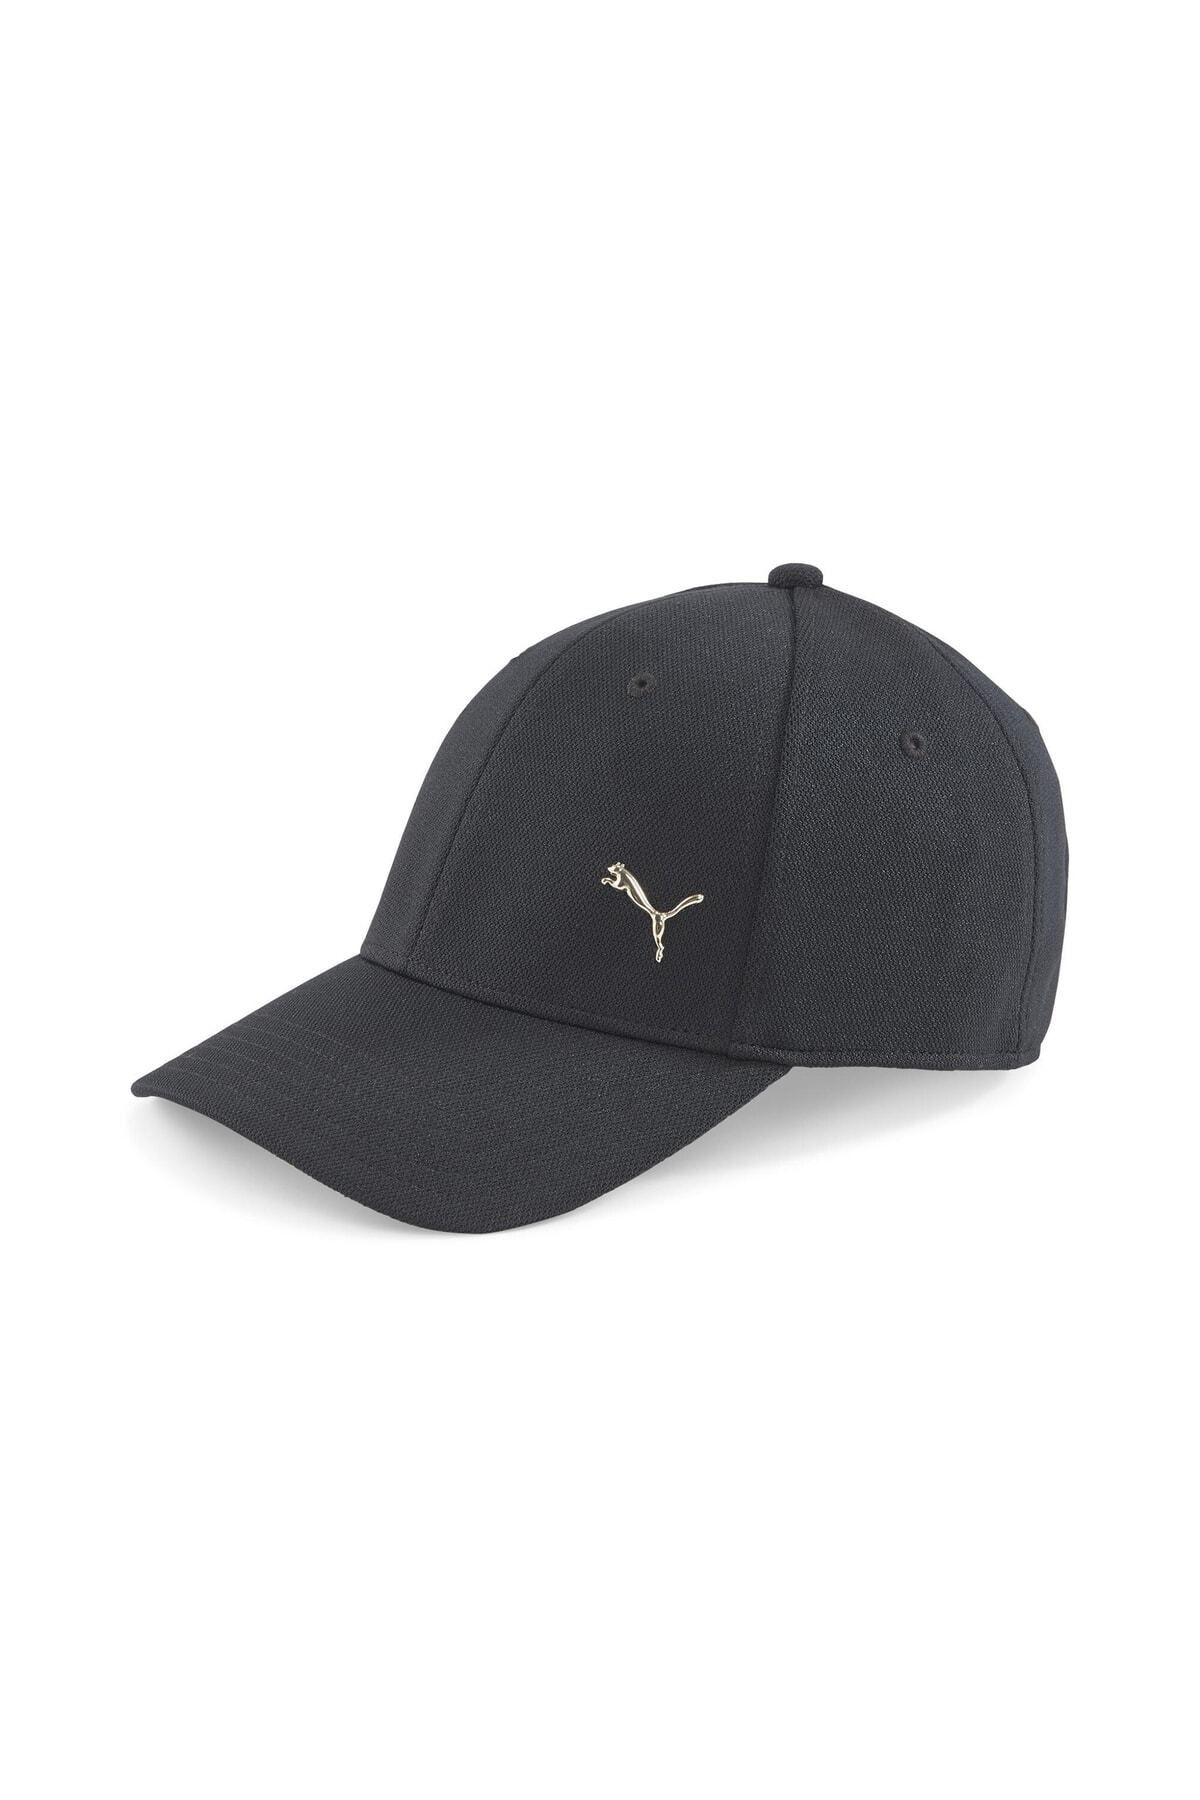 Puma Unisex Günlük Spor Şapka Siyah